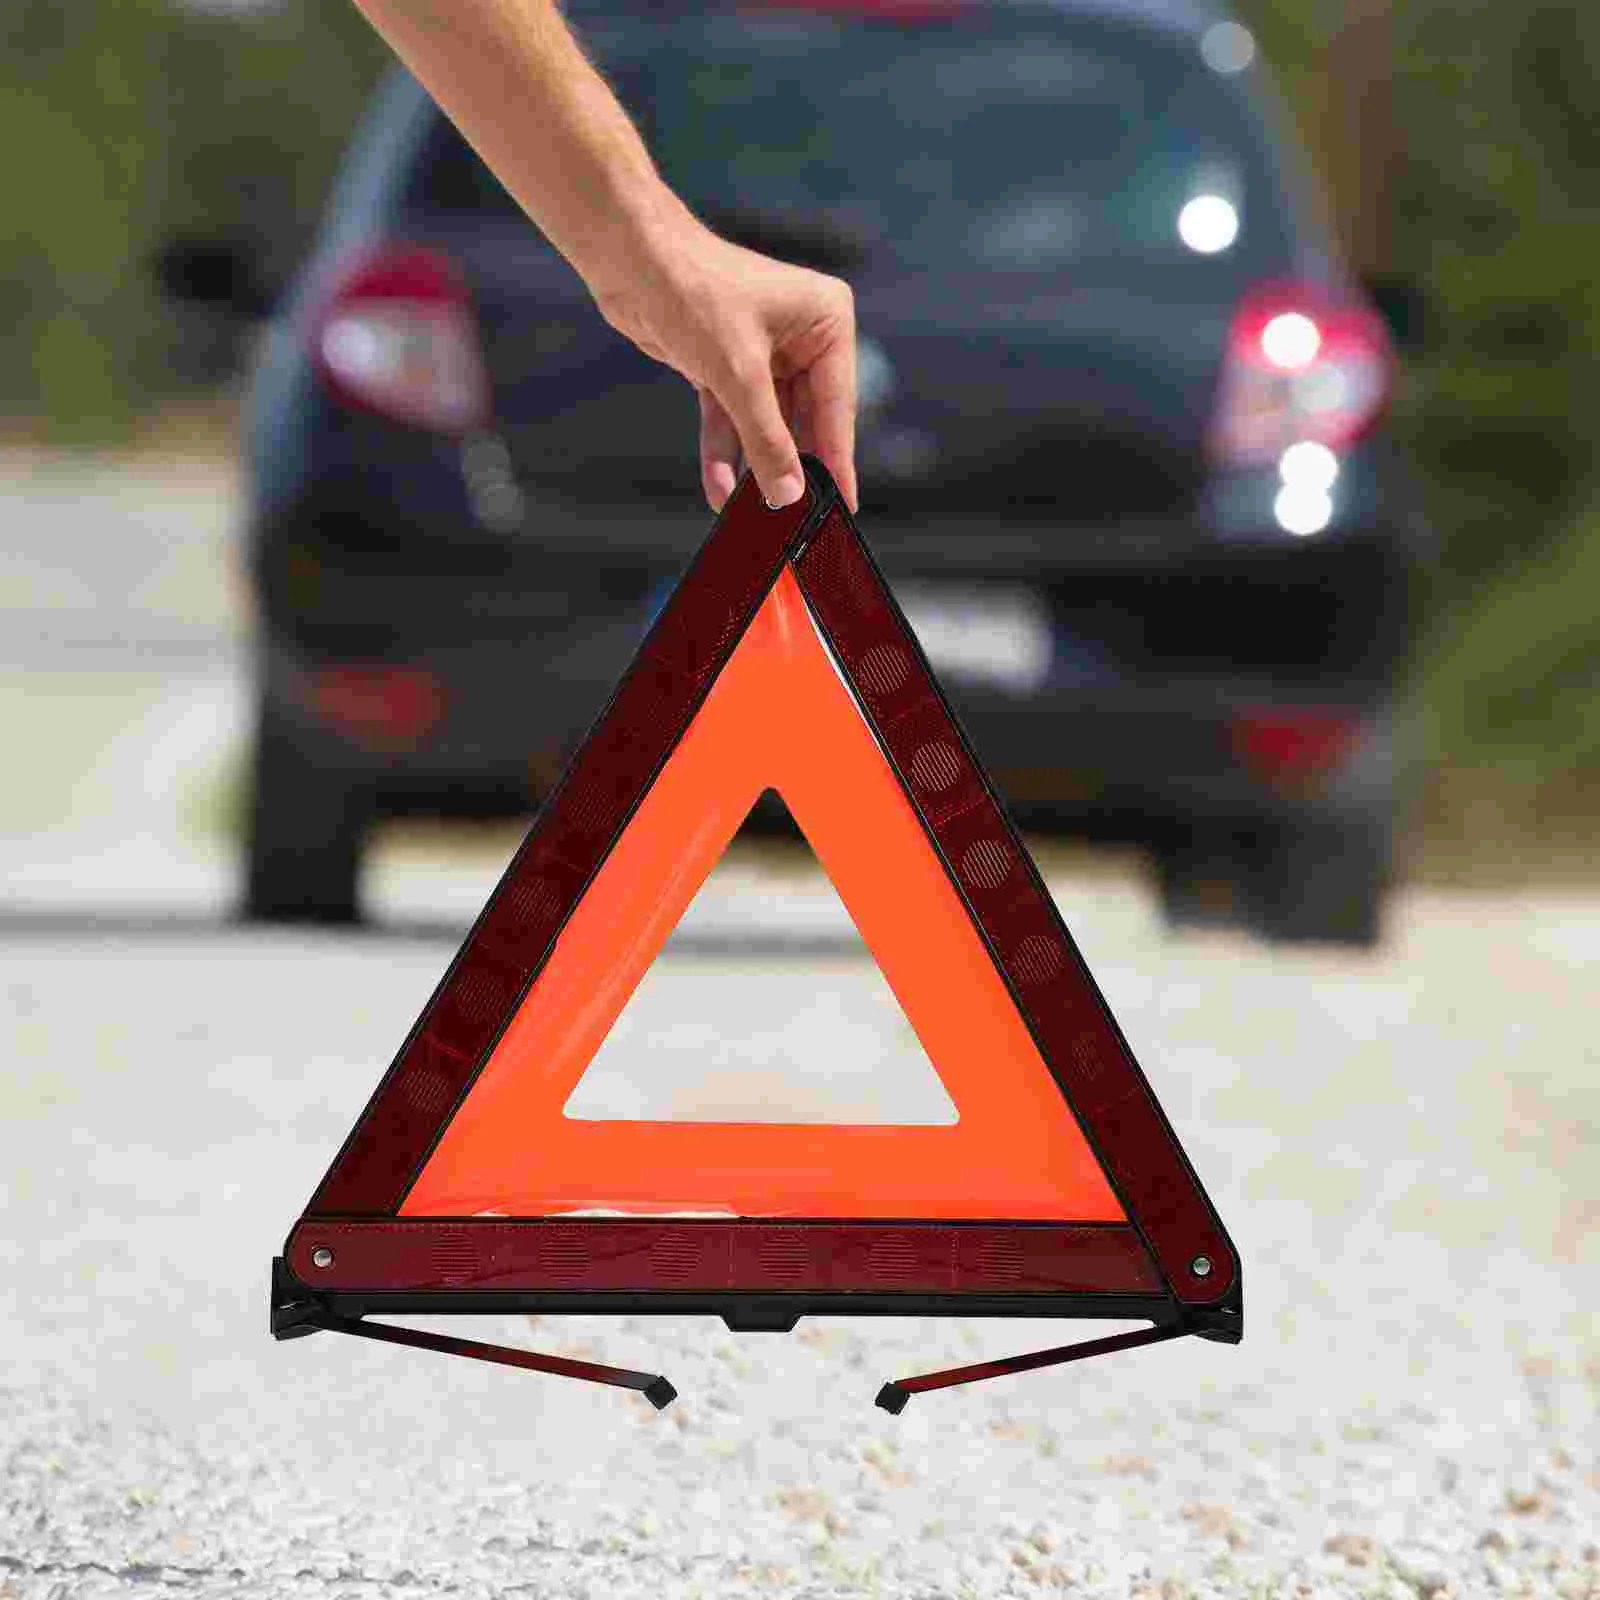 

3 Pcs Road Safety Warning Sign Roadside Hazard Triangle Symbol Warning Sign Emergency Warning Road Safety Triangle Kit